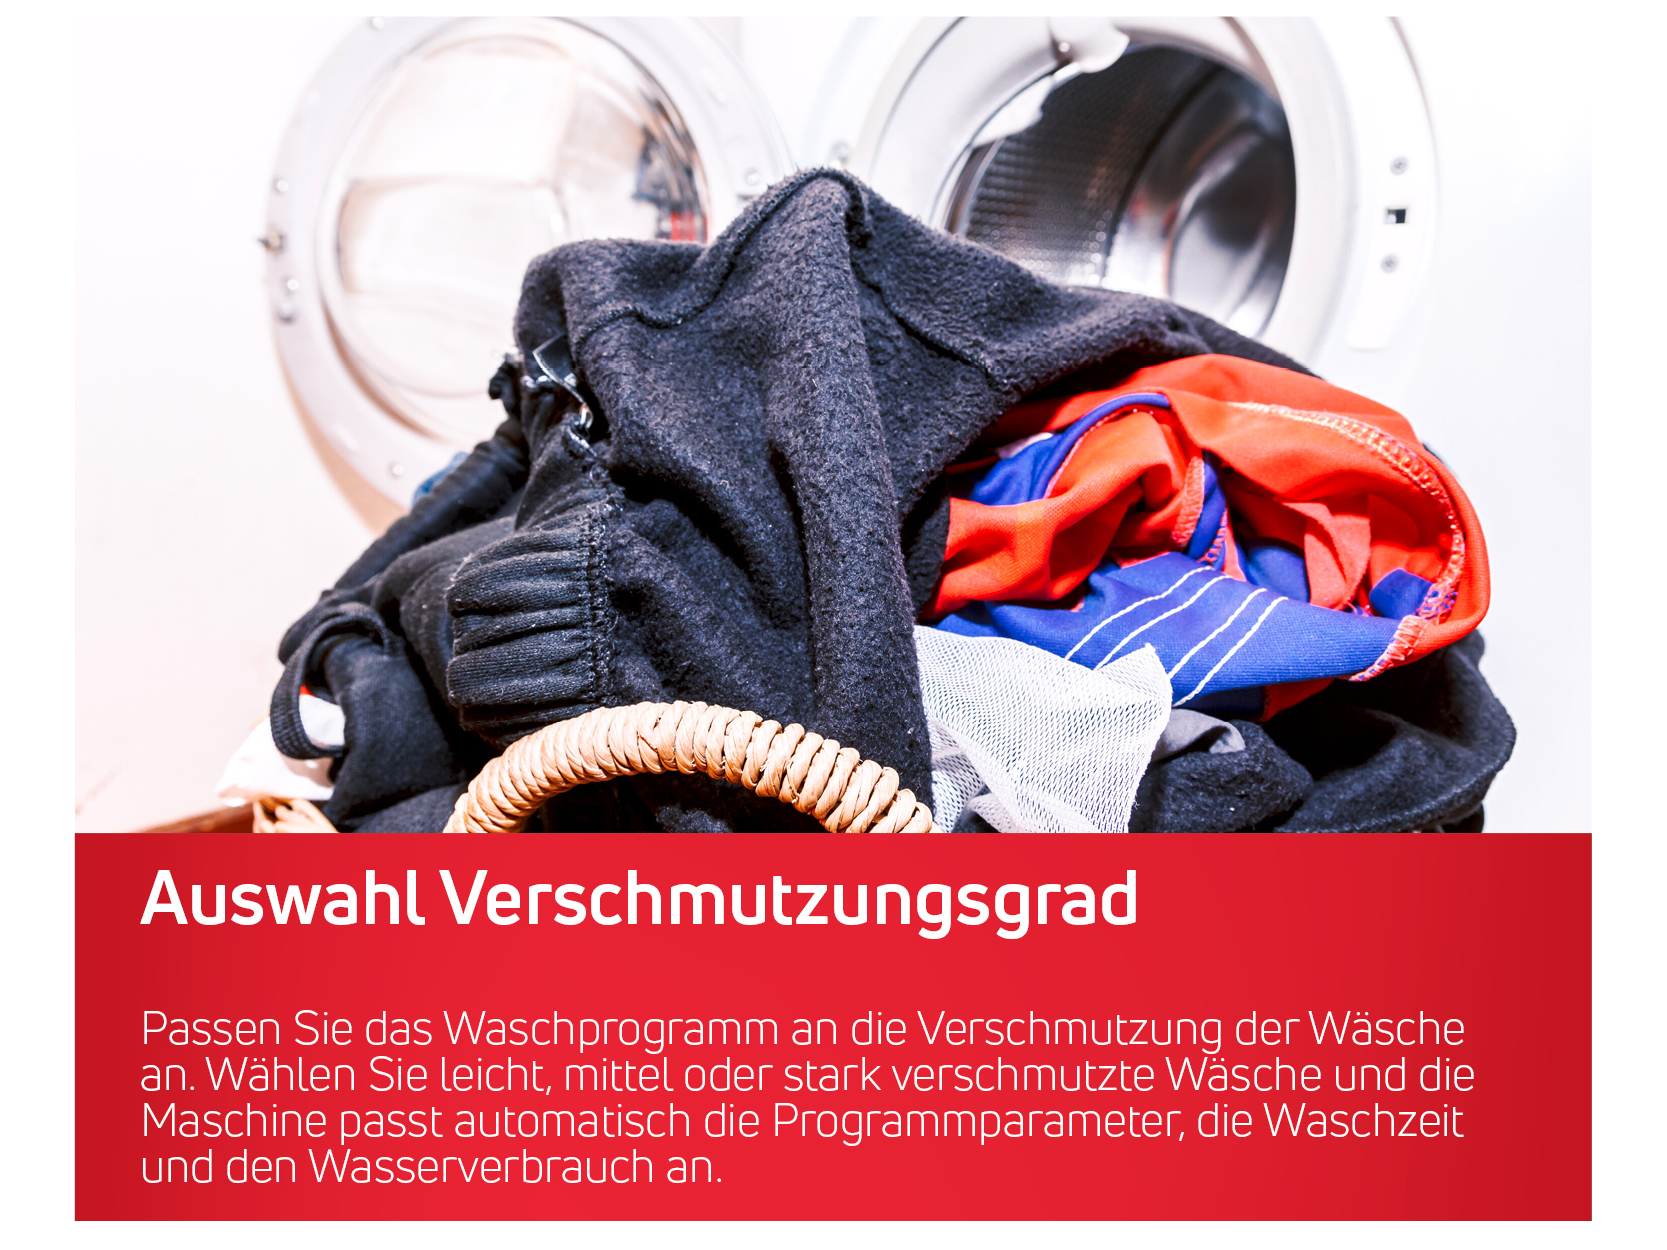 AMICA 070 484 B) U/Min., (8 WA Waschmaschine kg, 1400